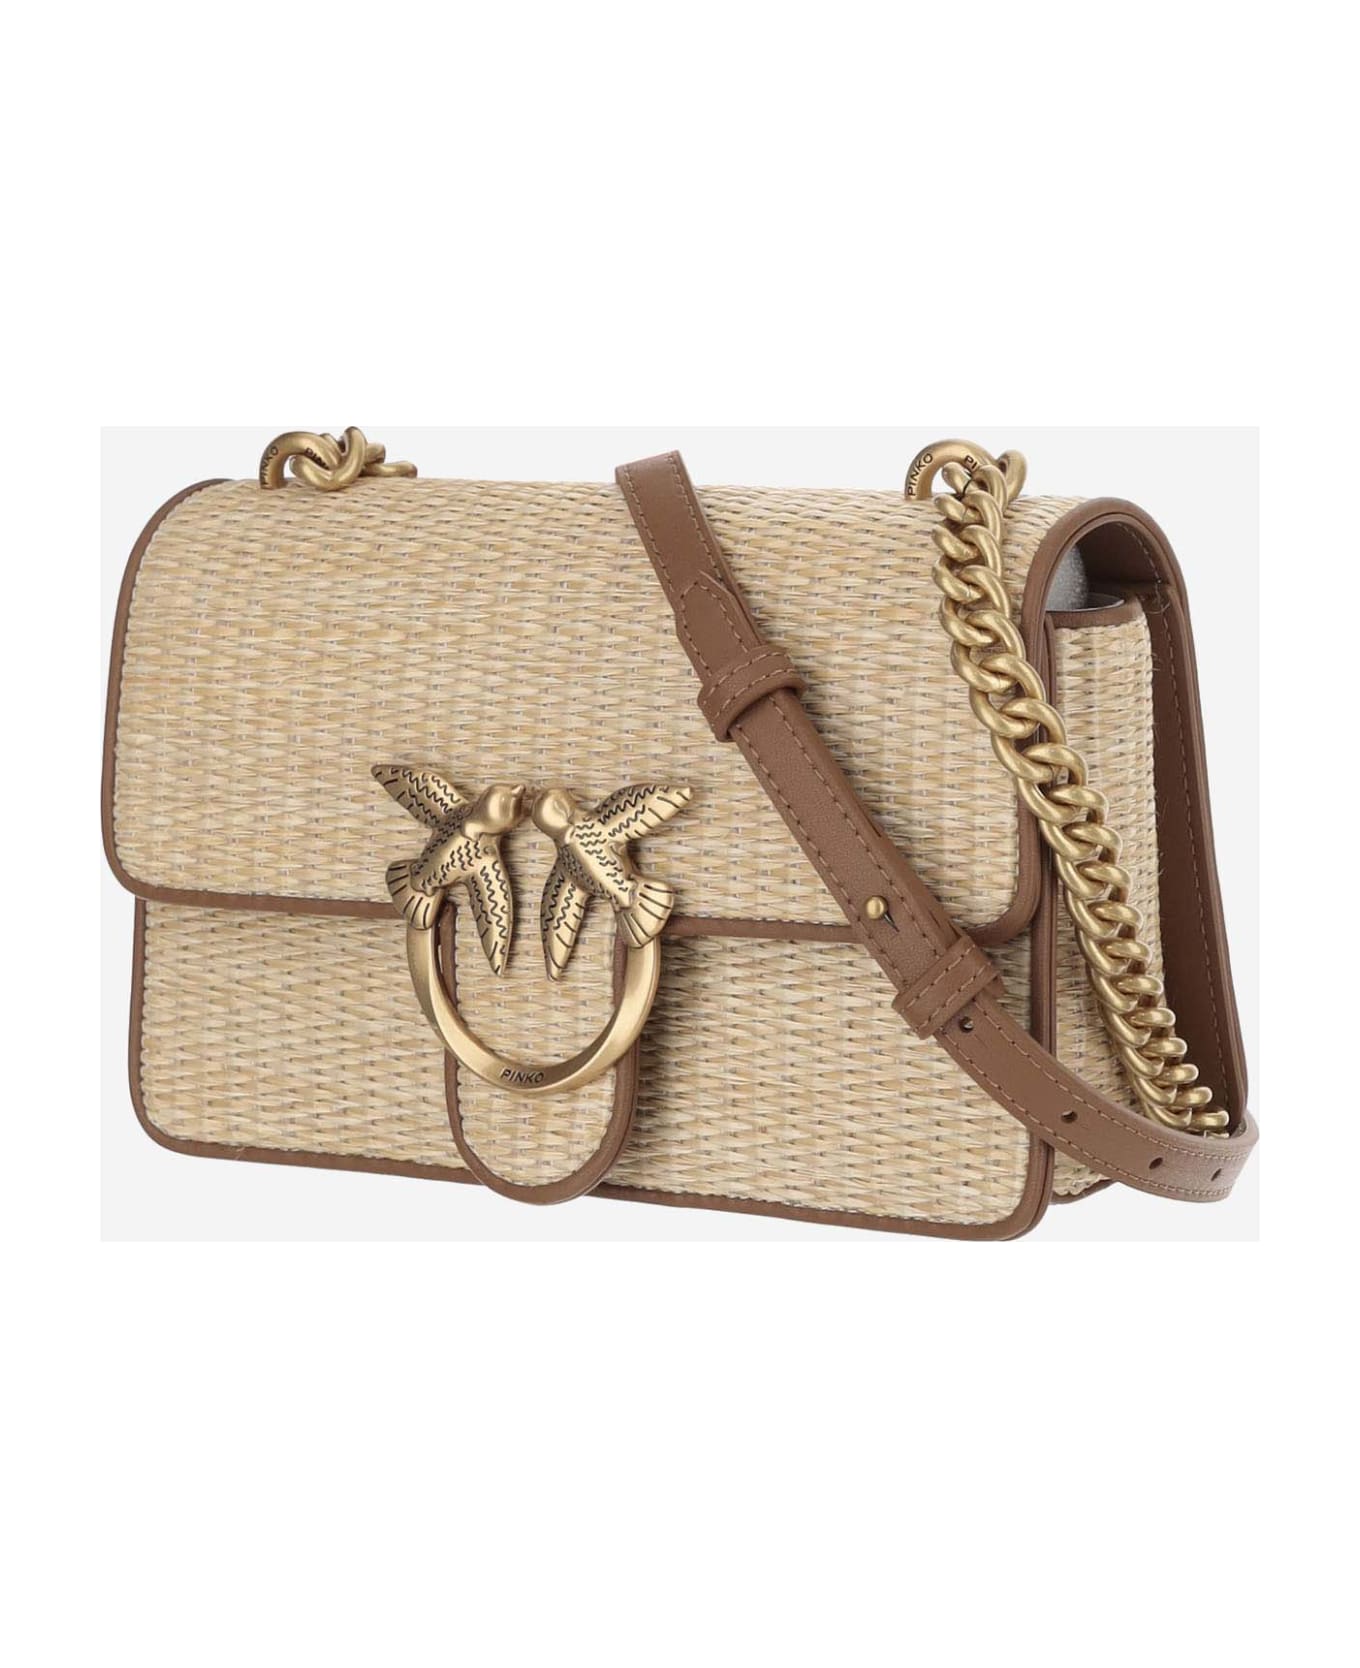 Pinko Mini Love Light Bag In Raffia And Leather - Naturale/cuoio-antique gold